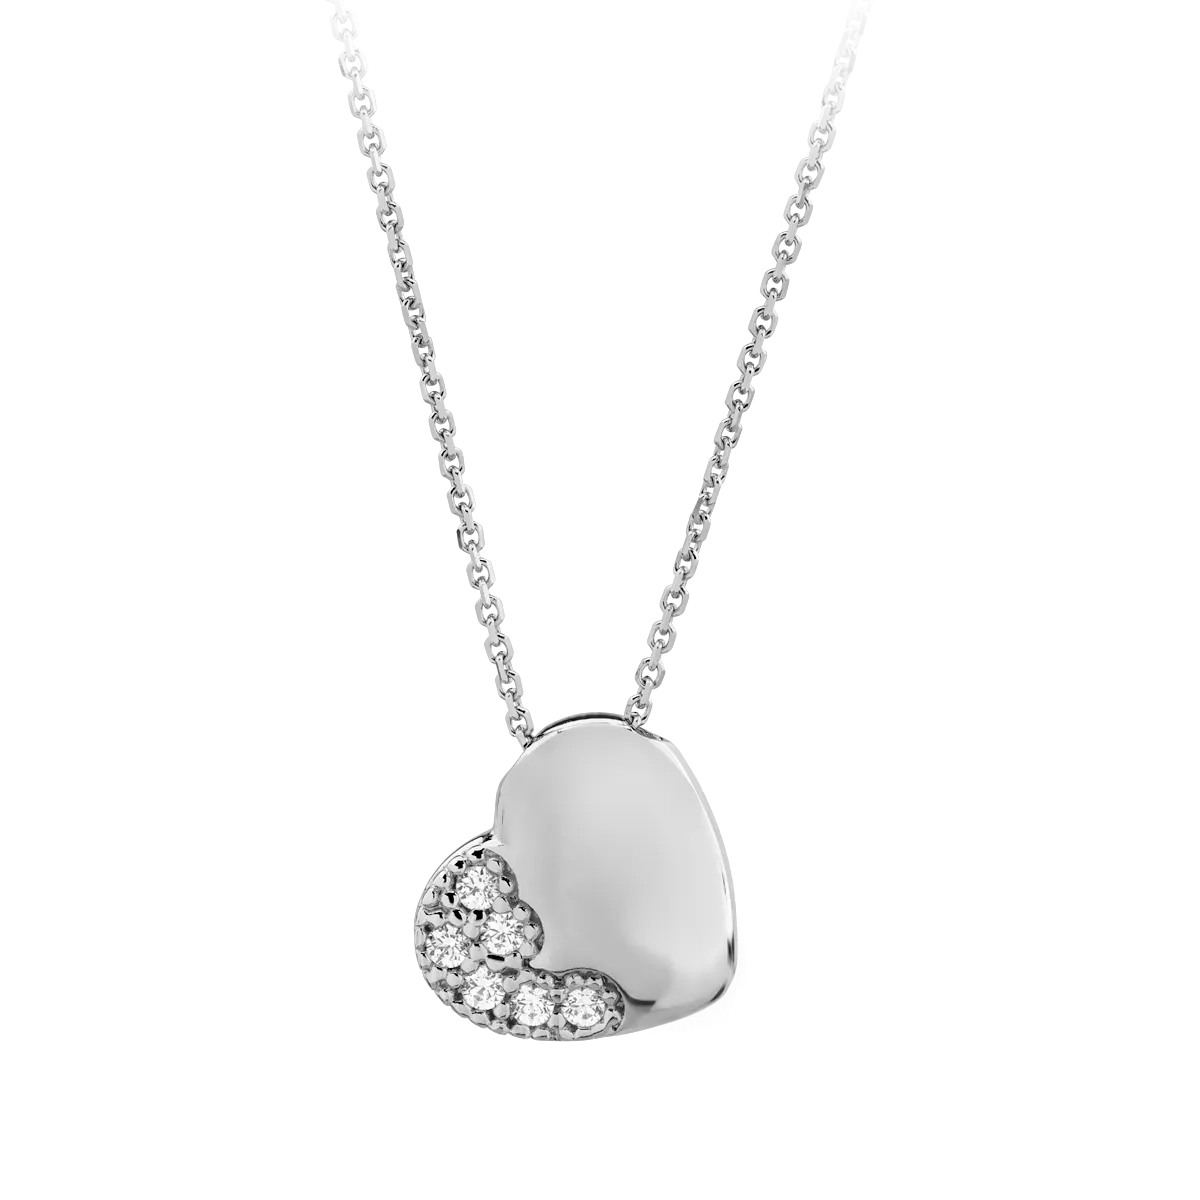 14K white gold heart pendant necklace